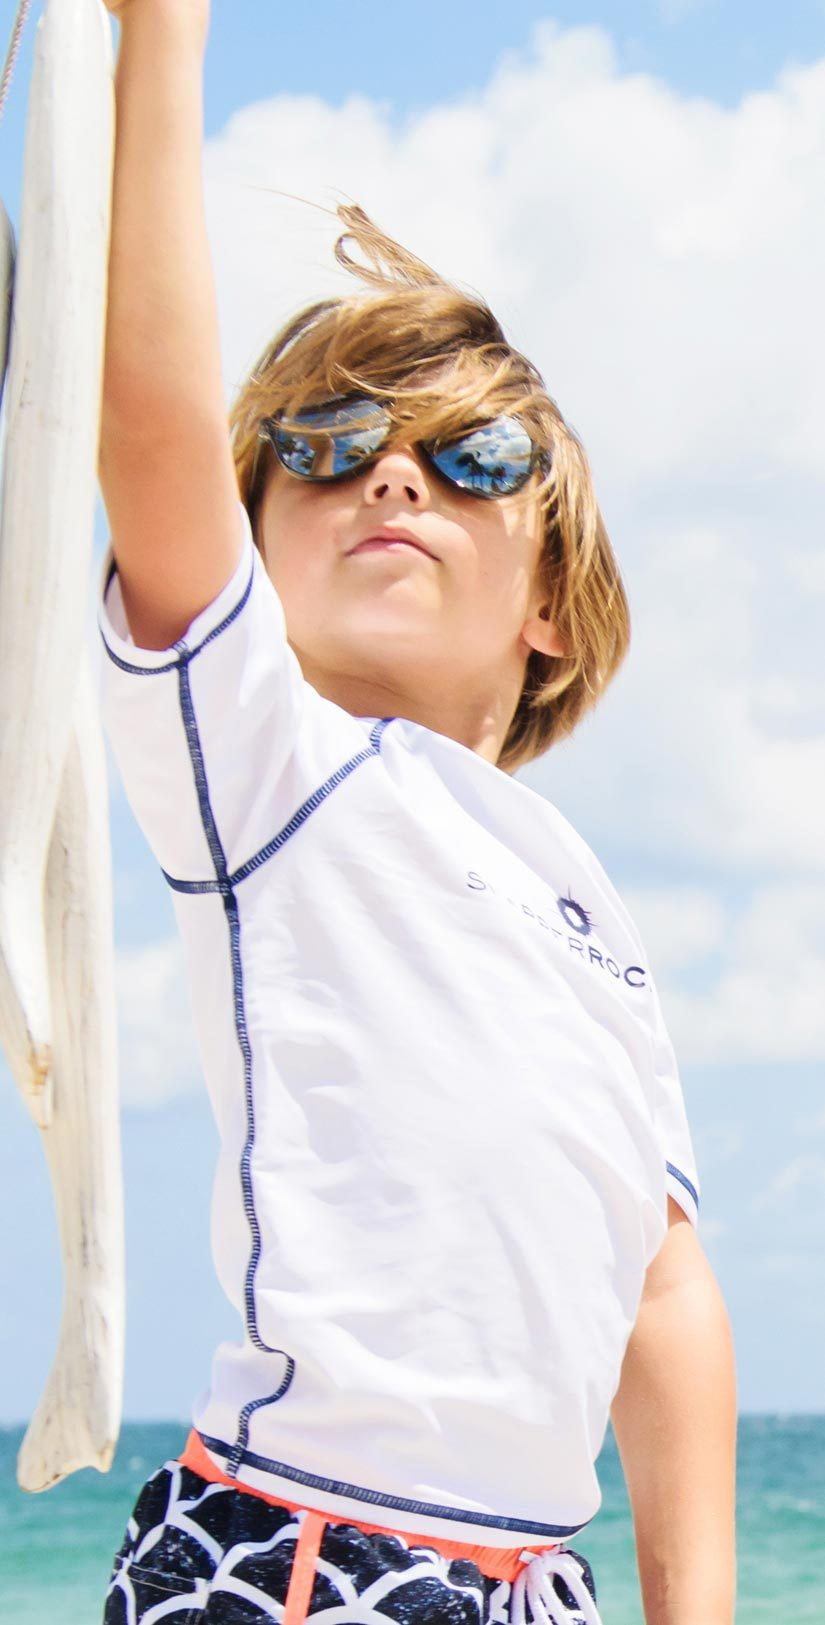 Snapperrock Boy's Short Sleeve Rashguard Top in White 125: